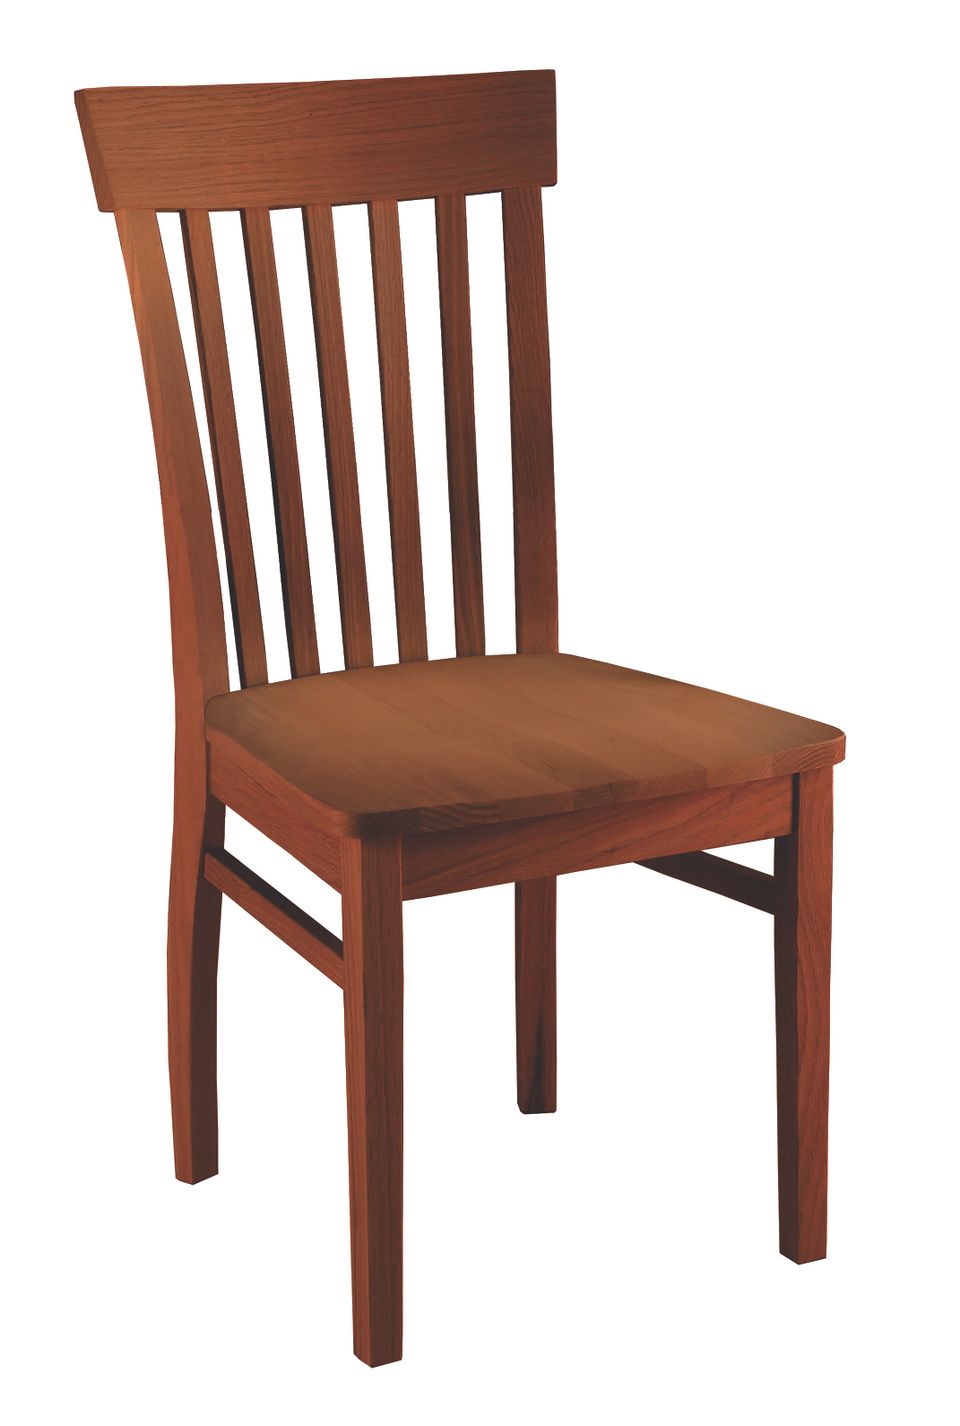 Cd harrison side chair 11002